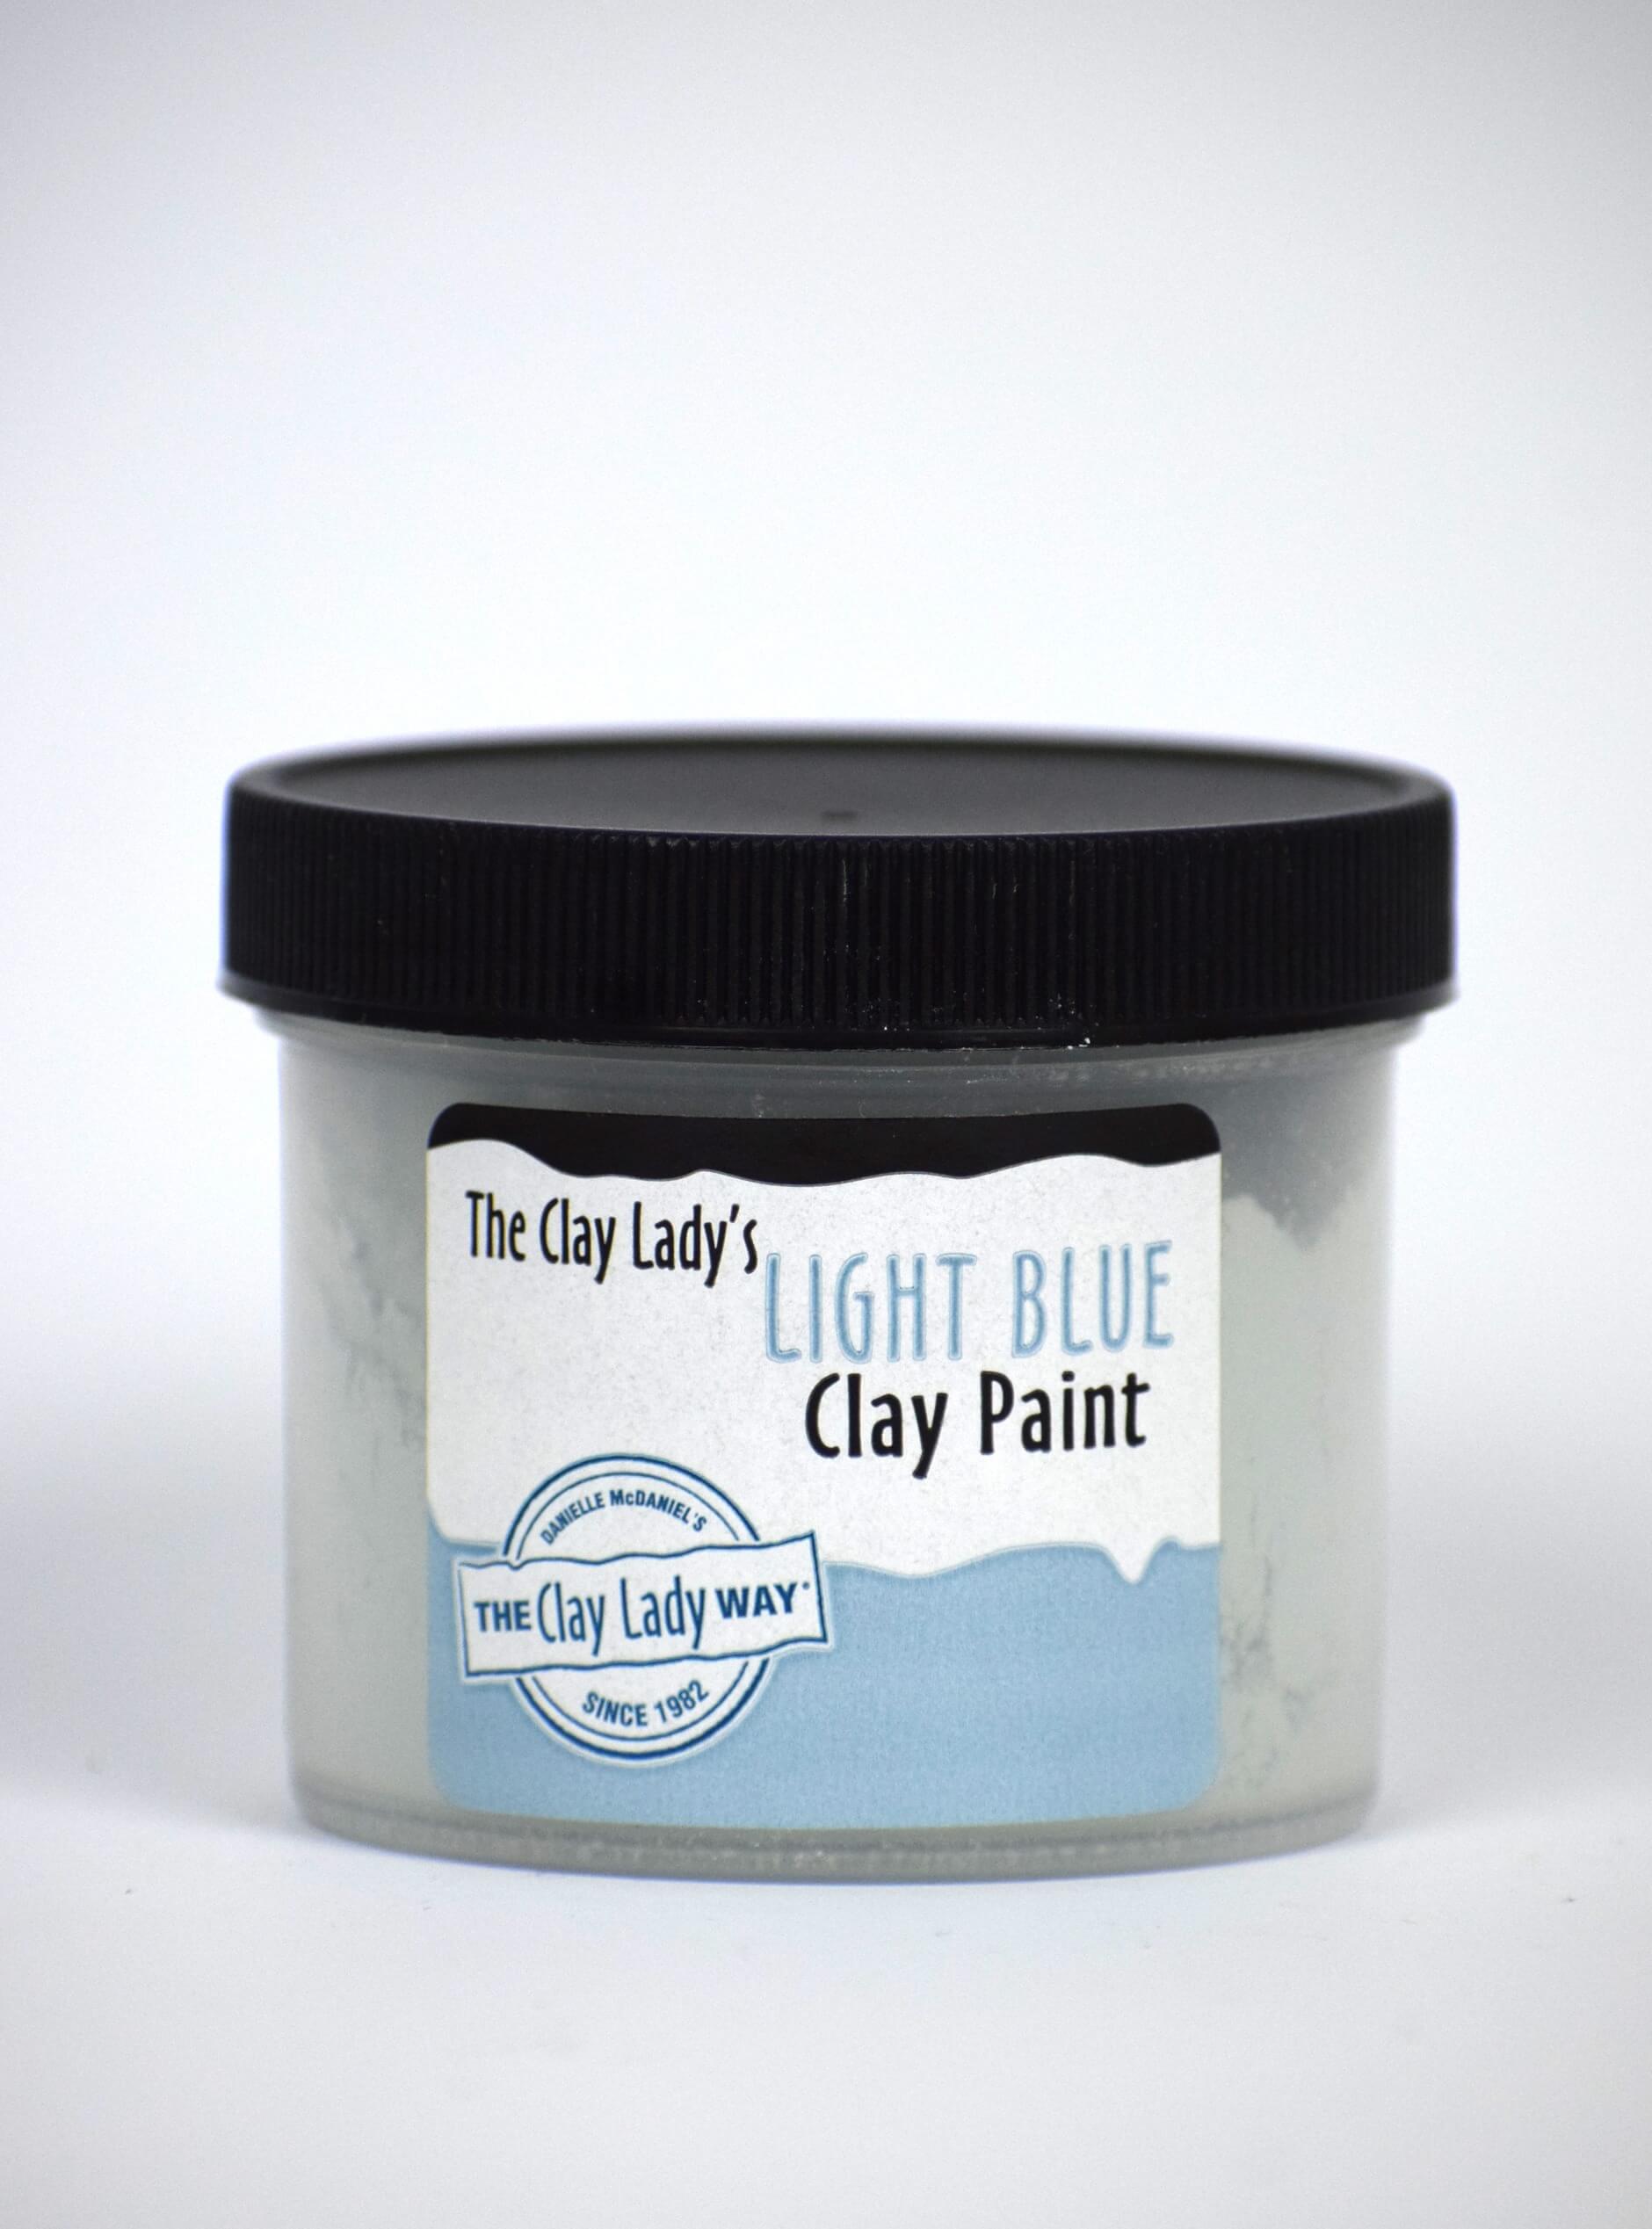 The Clay Lady's Light Blue Clay Paint Copy - Mid-South Ceramics